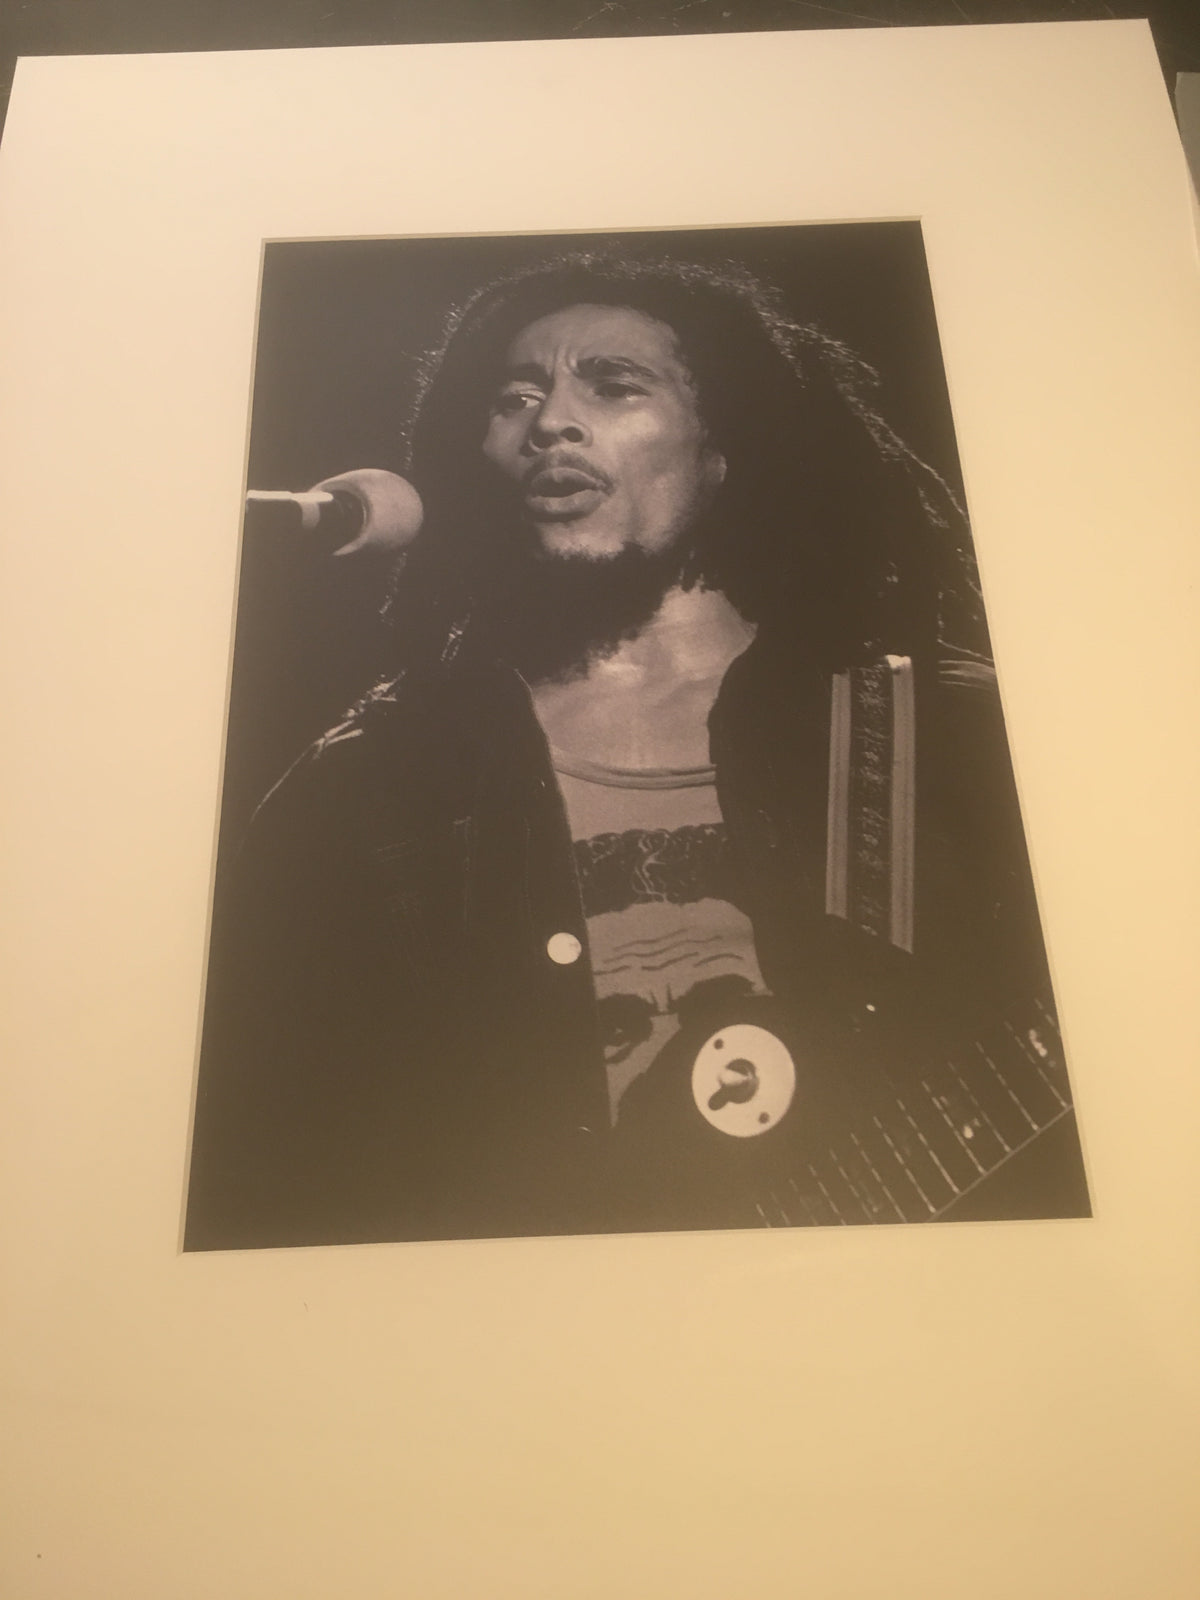 Bob Marley - London, 1975